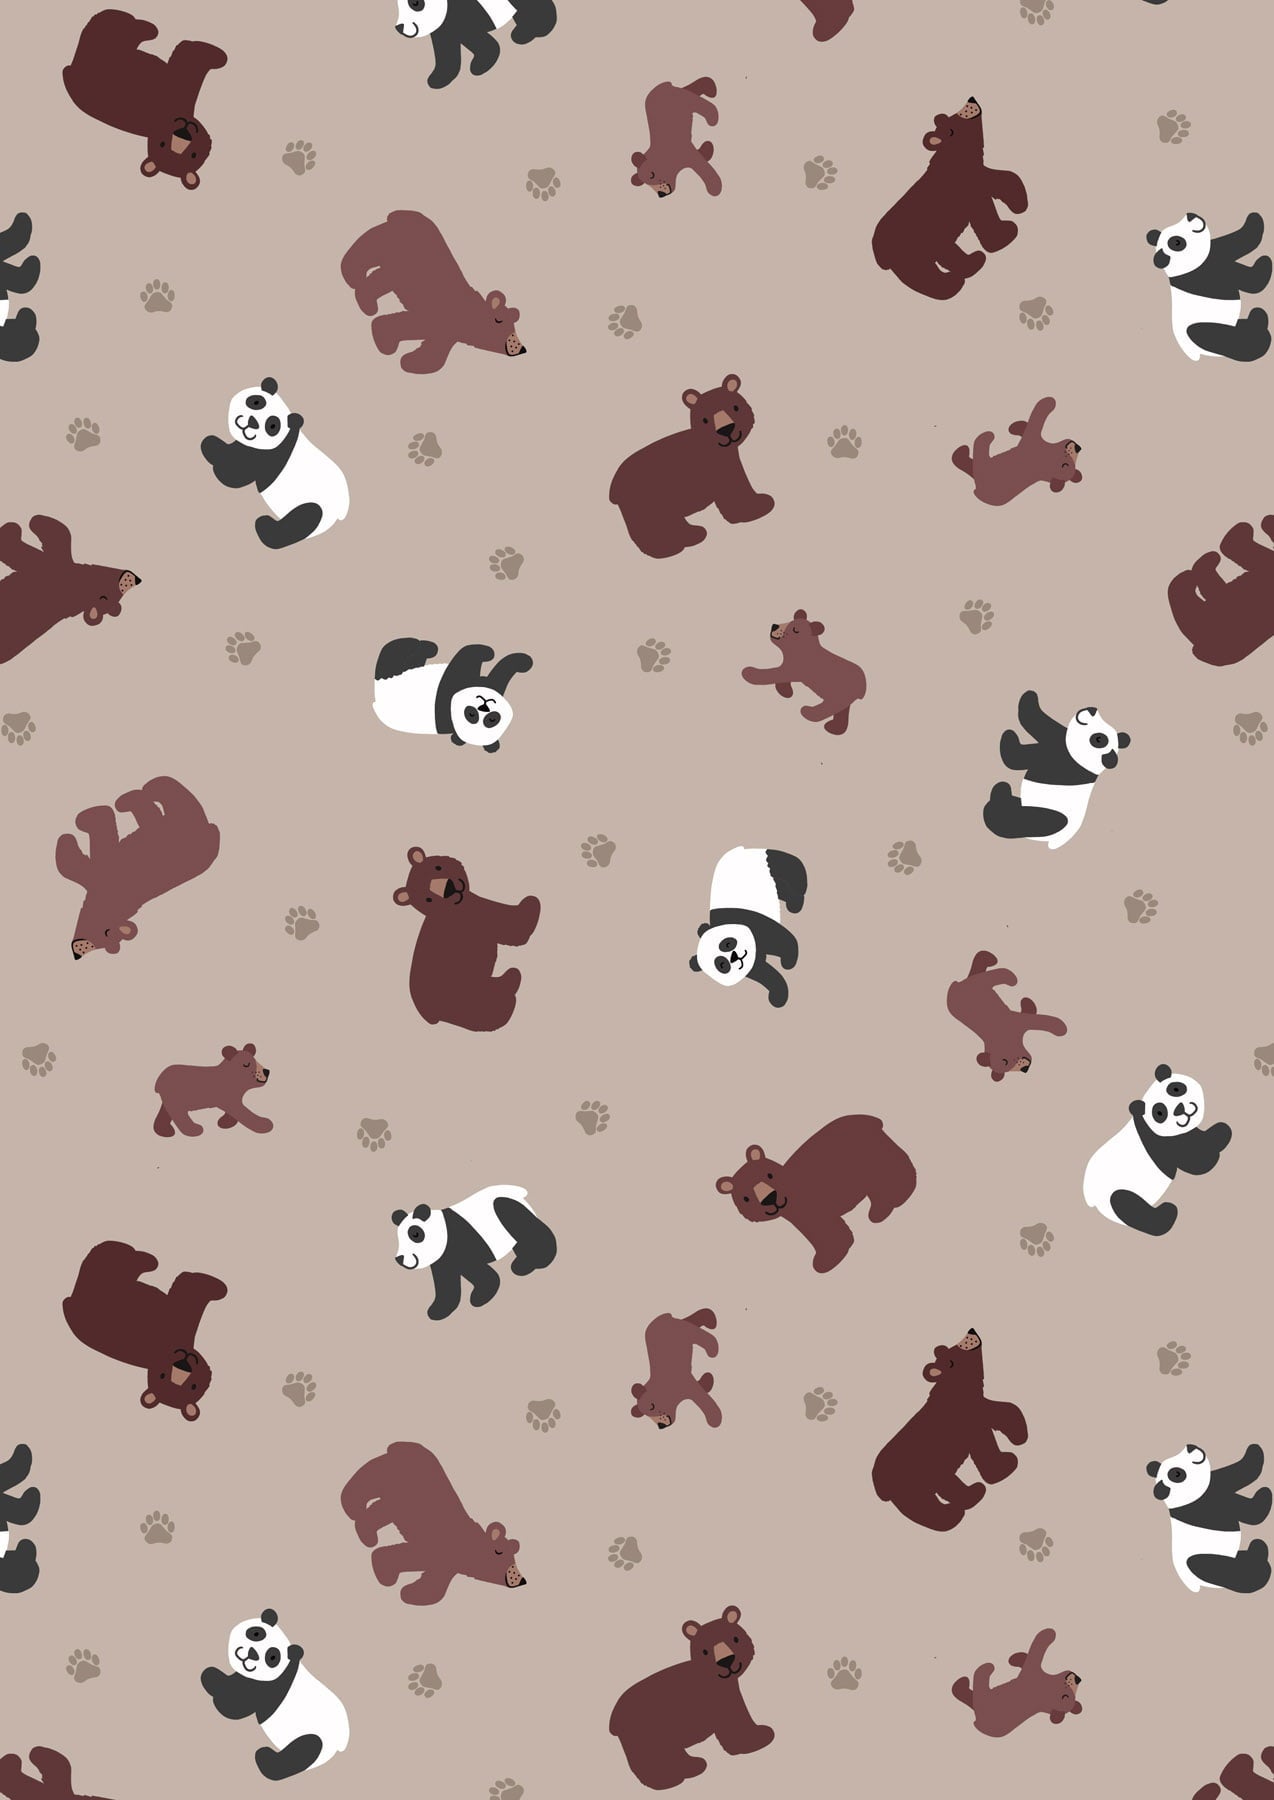 Small Things - Panda & Bears in Brown